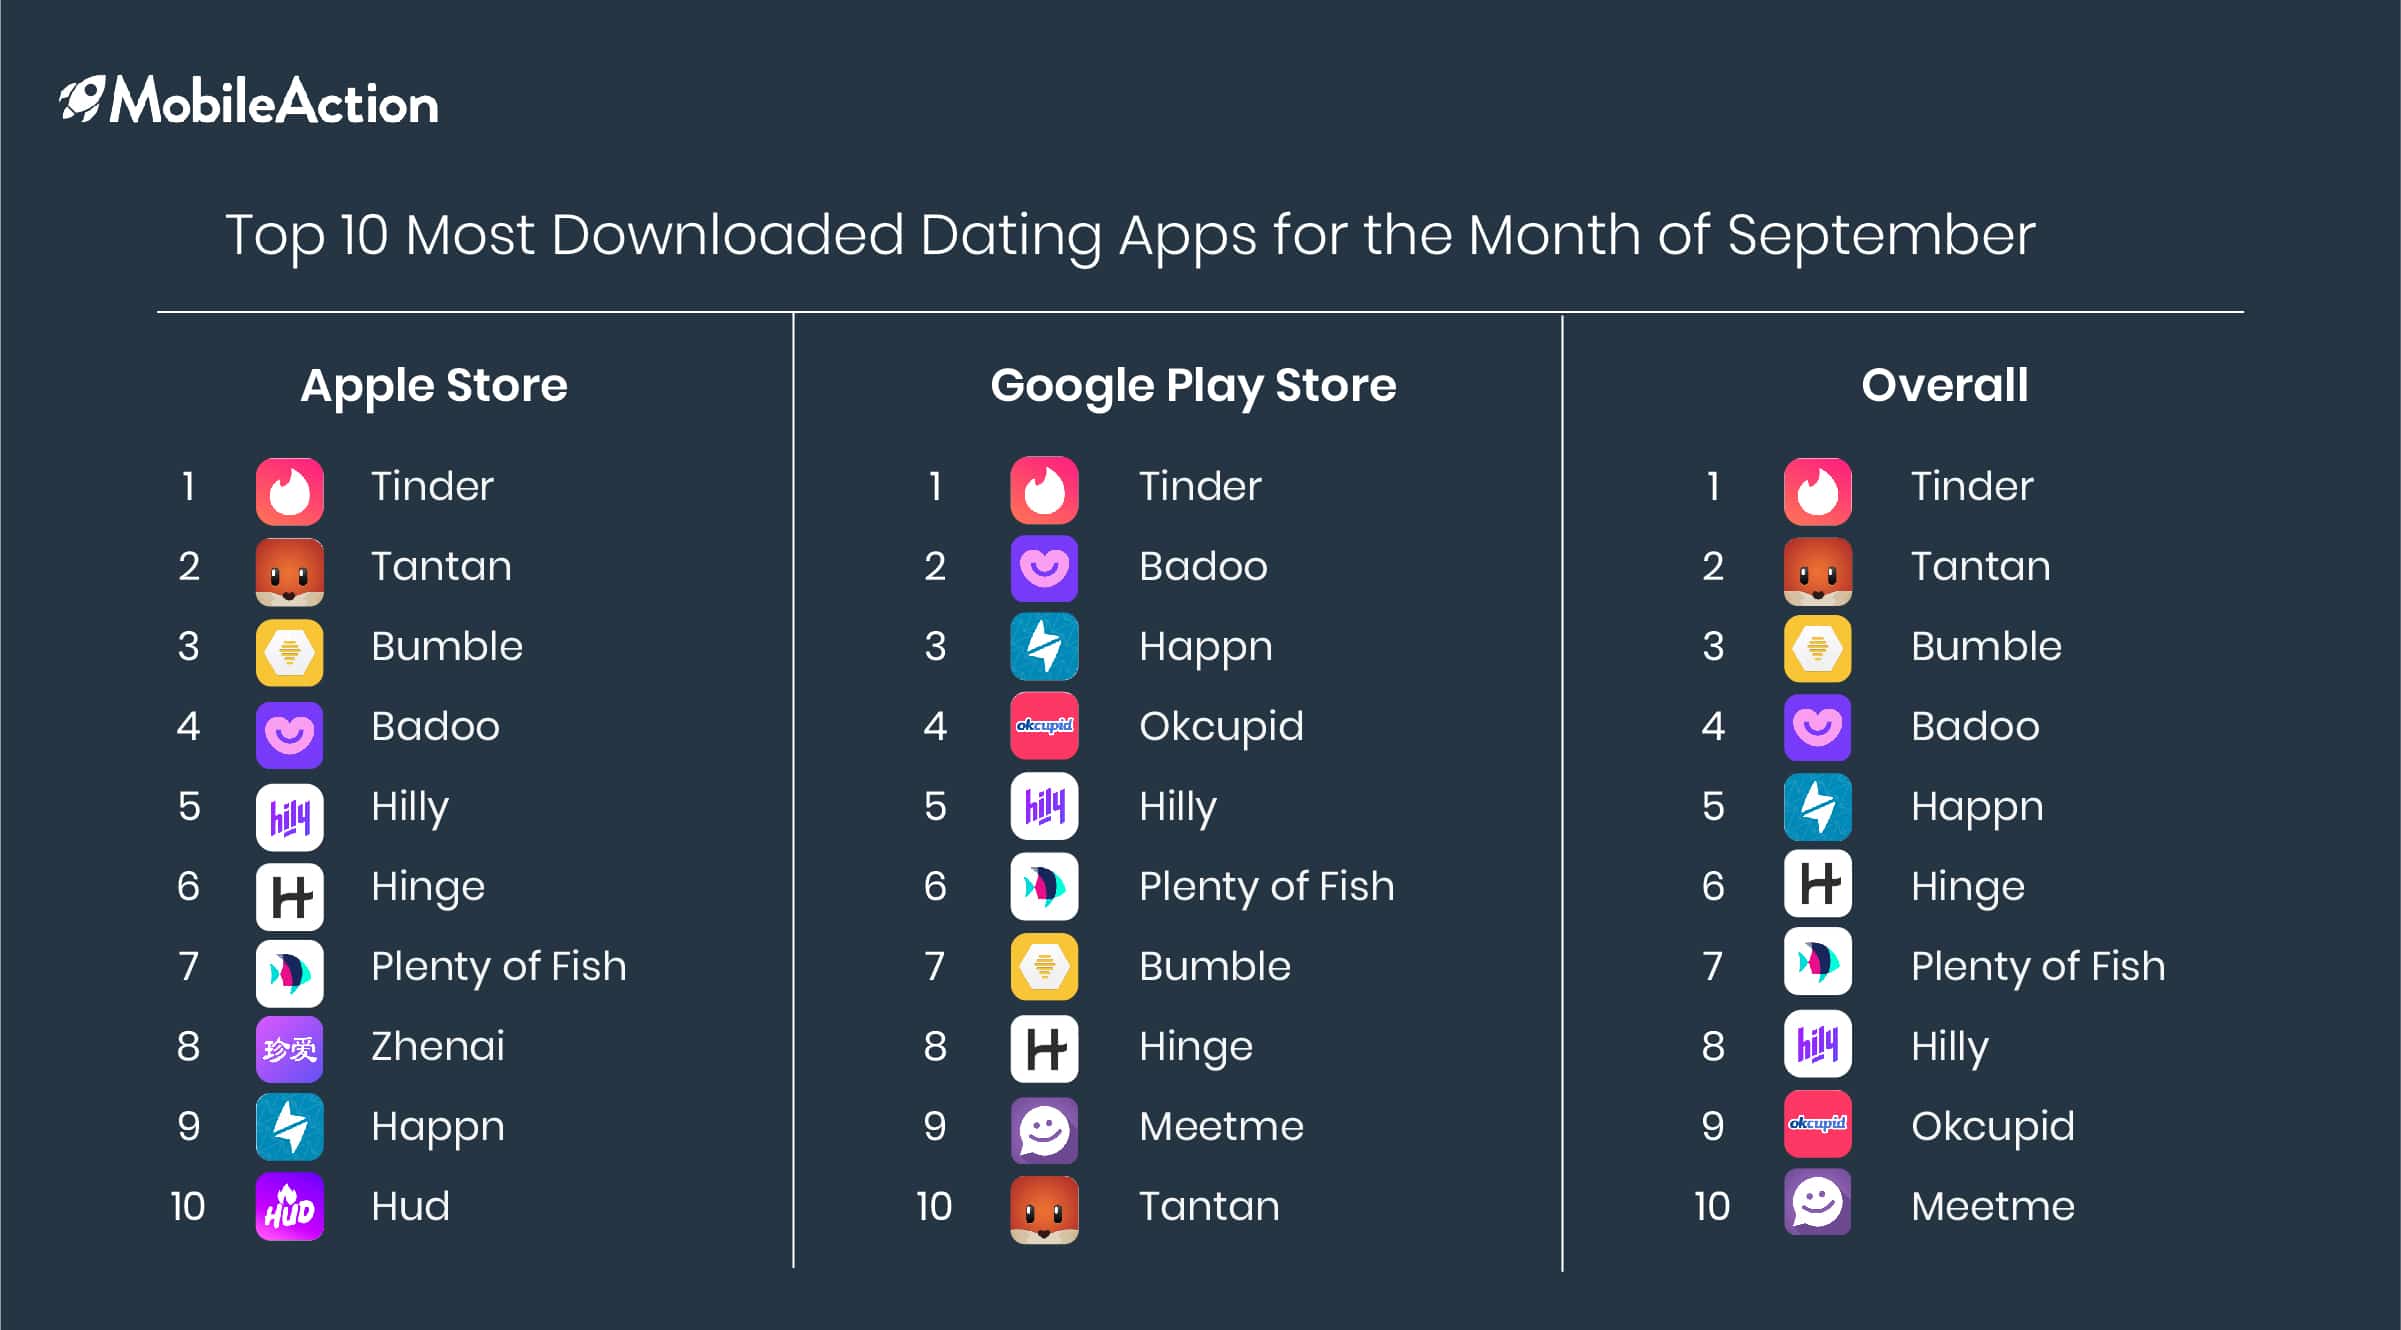 Top 10 Dating Apps Worldwide for September 2019